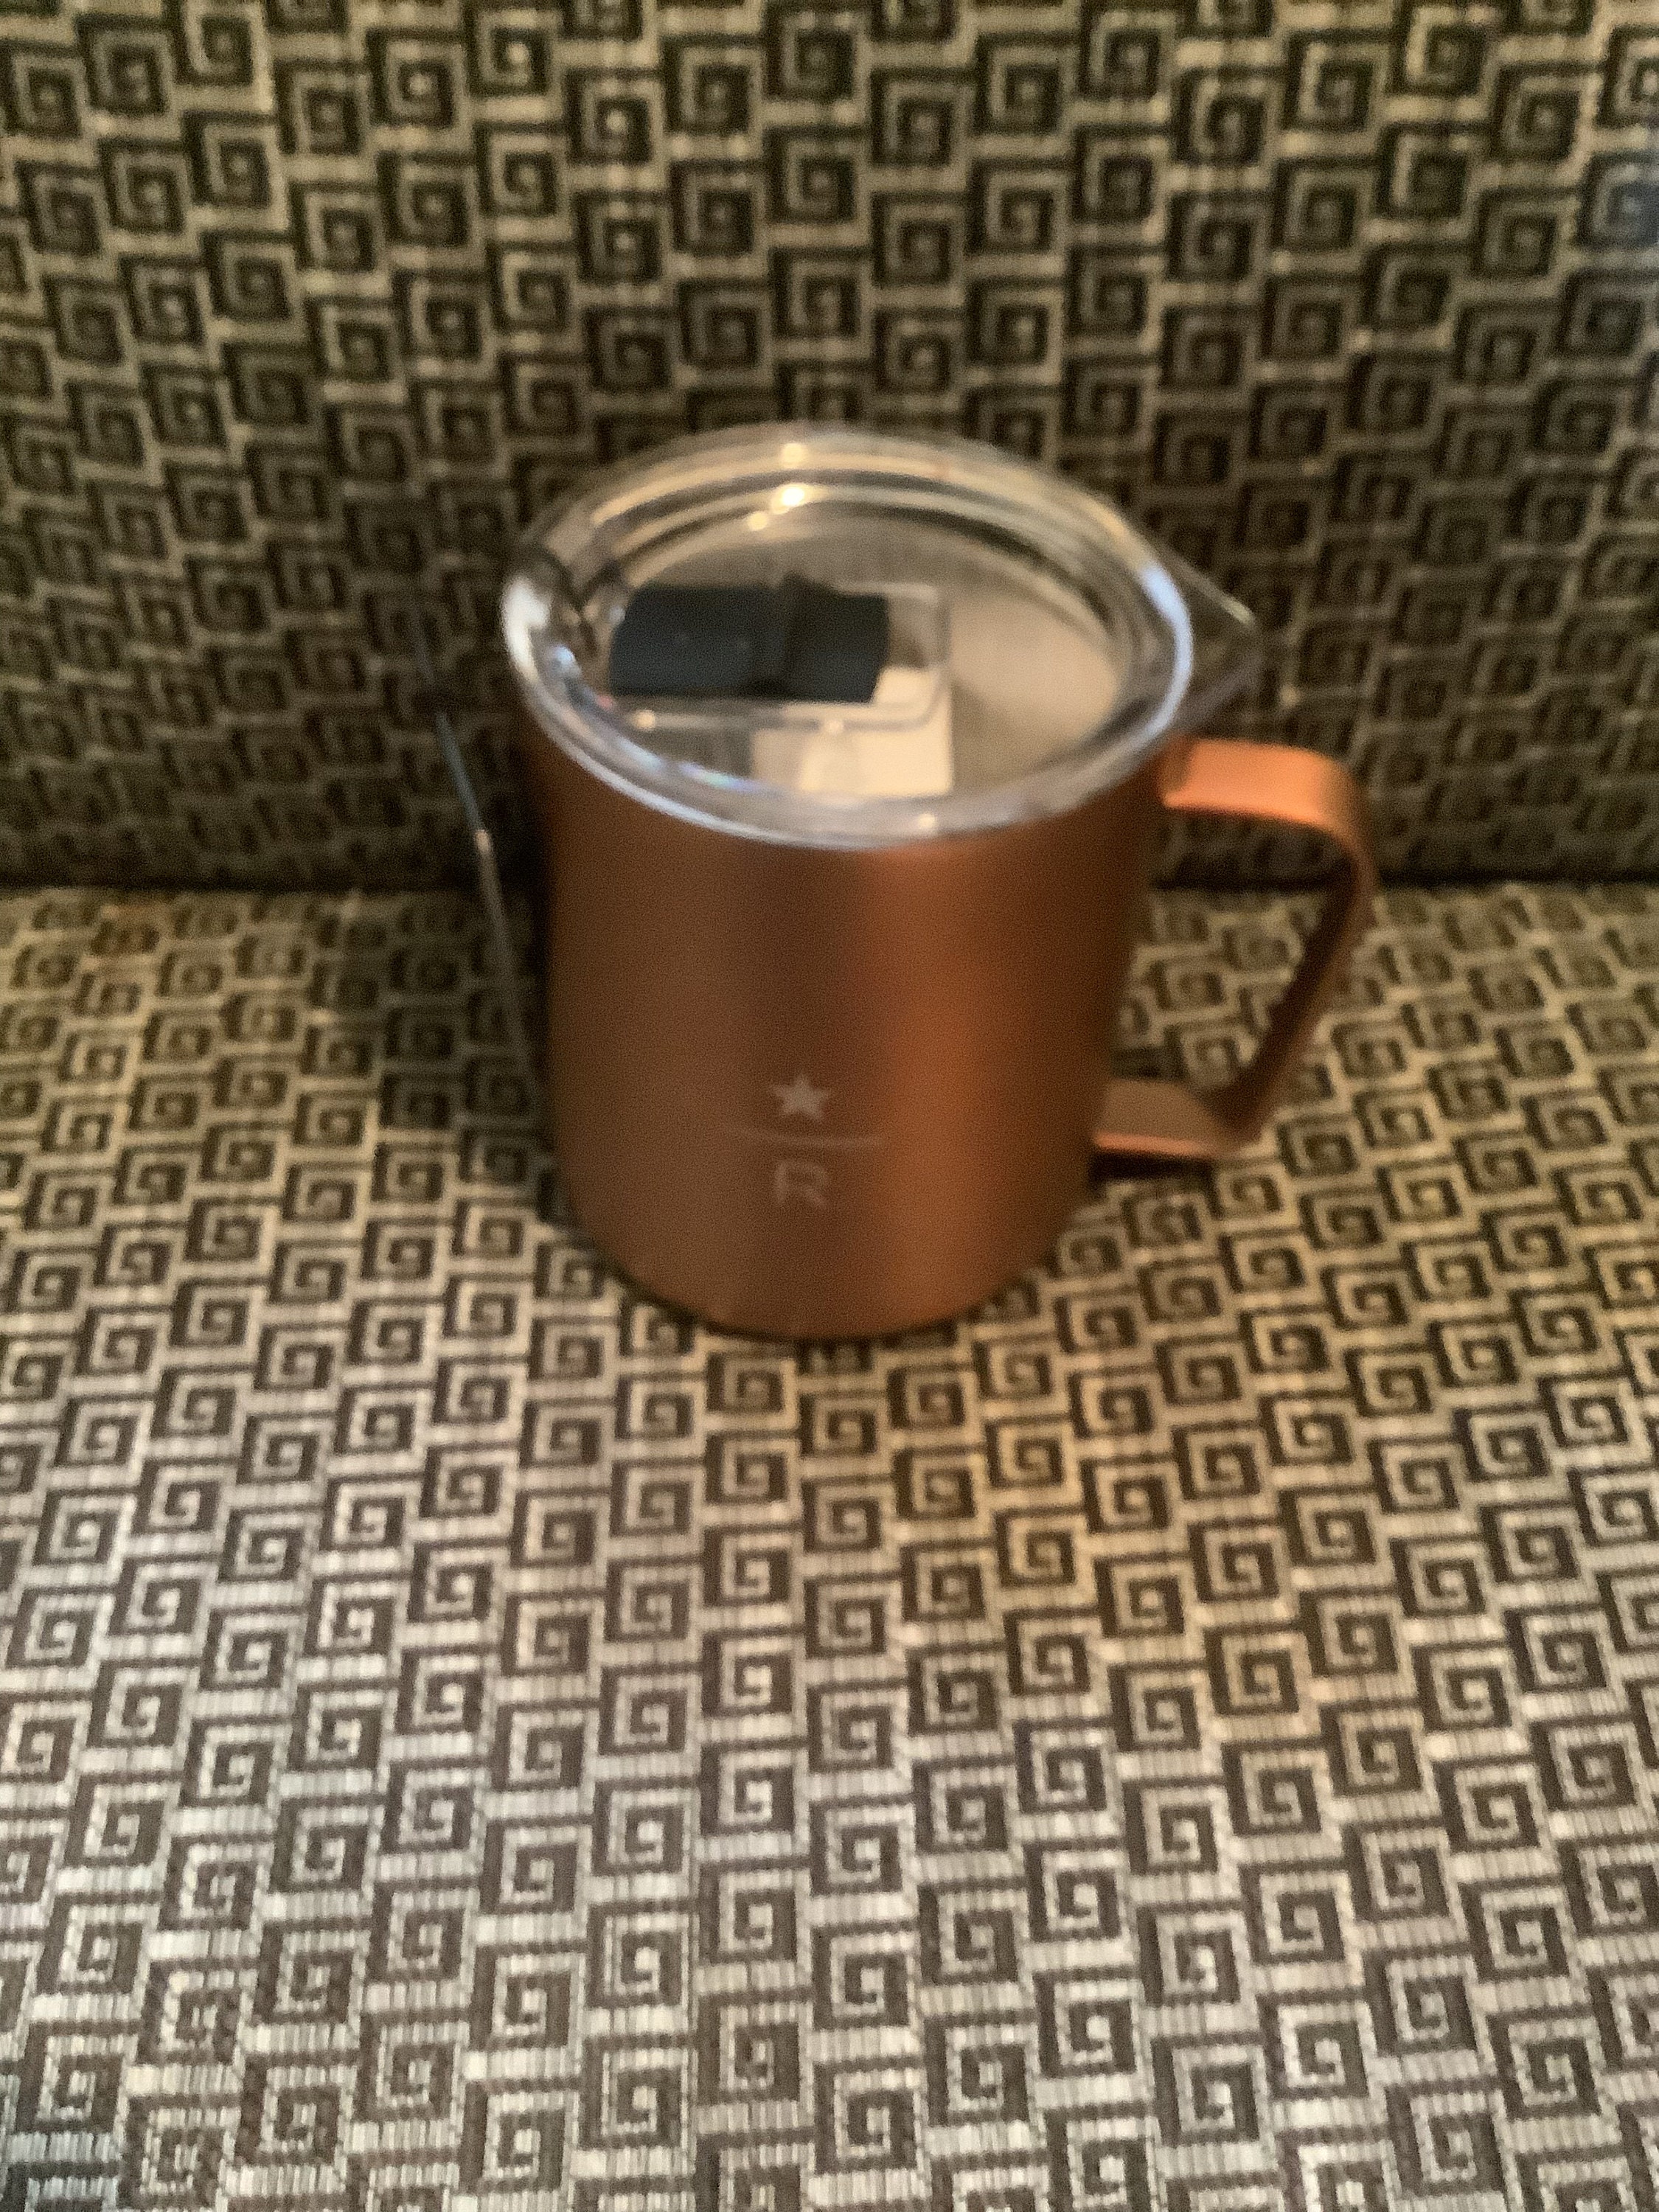 Starbucks 2015 Stainless Steel/Copper Travel Tumbler Mug 16oz with Lid